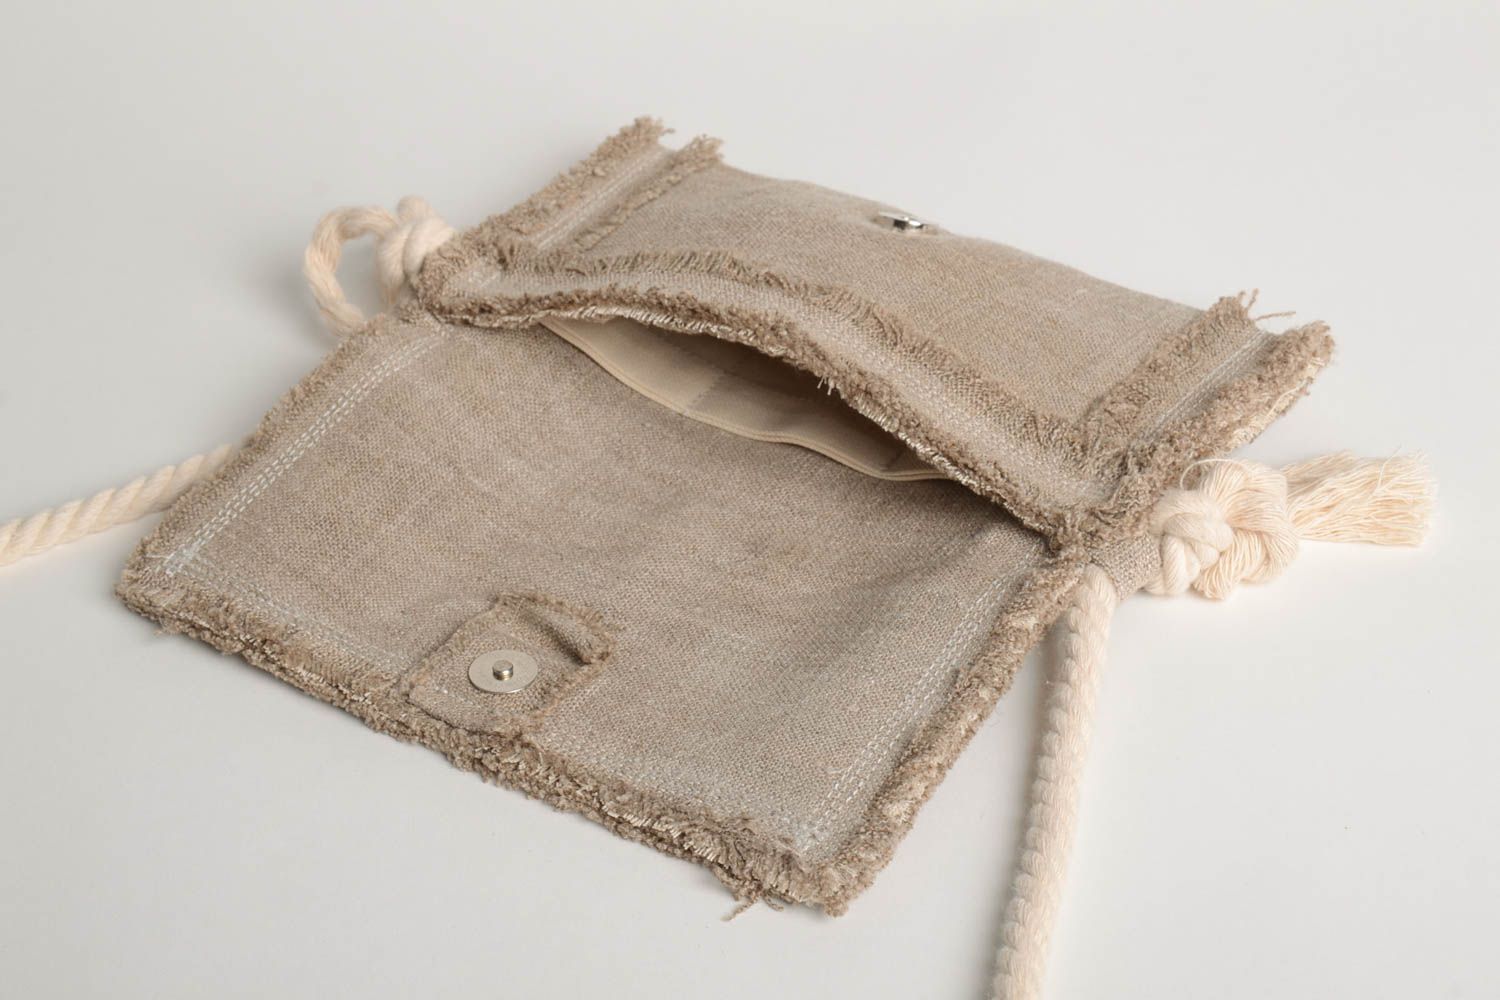 Handmade linen purses stylish accessories women bags designer handbags photo 4